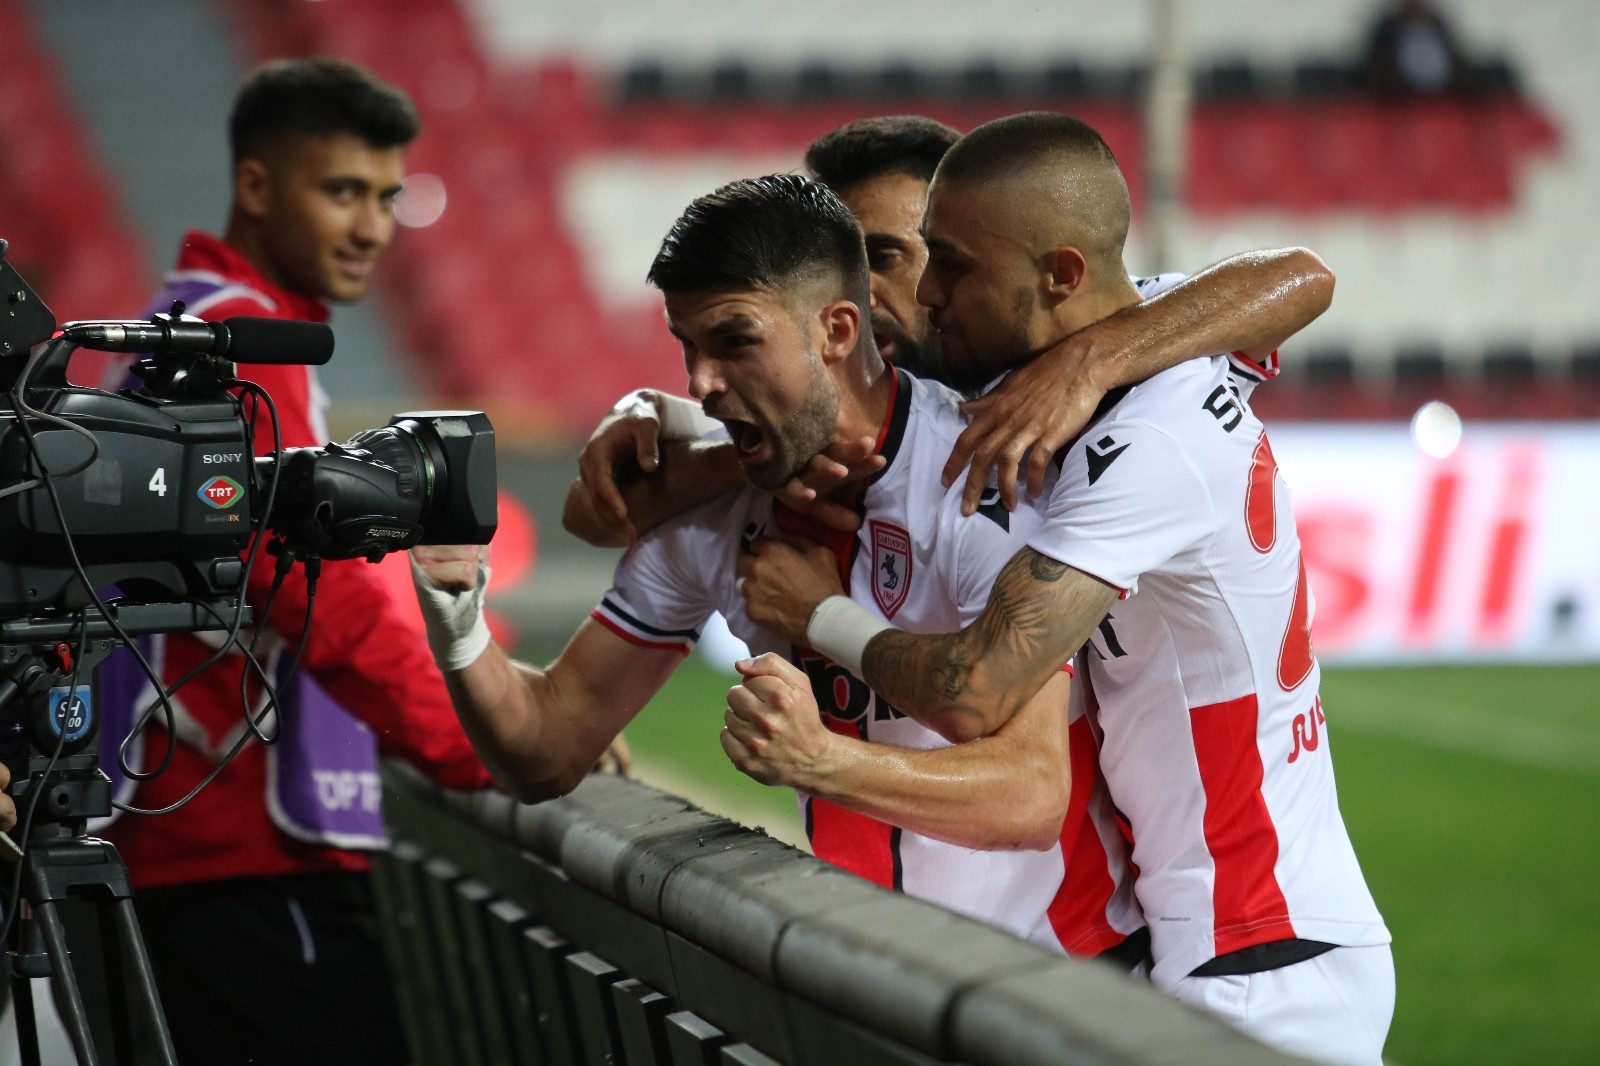 TFF 1. Lig: Samsunspor: 2 - Ankara Keçiörengücü: 0
